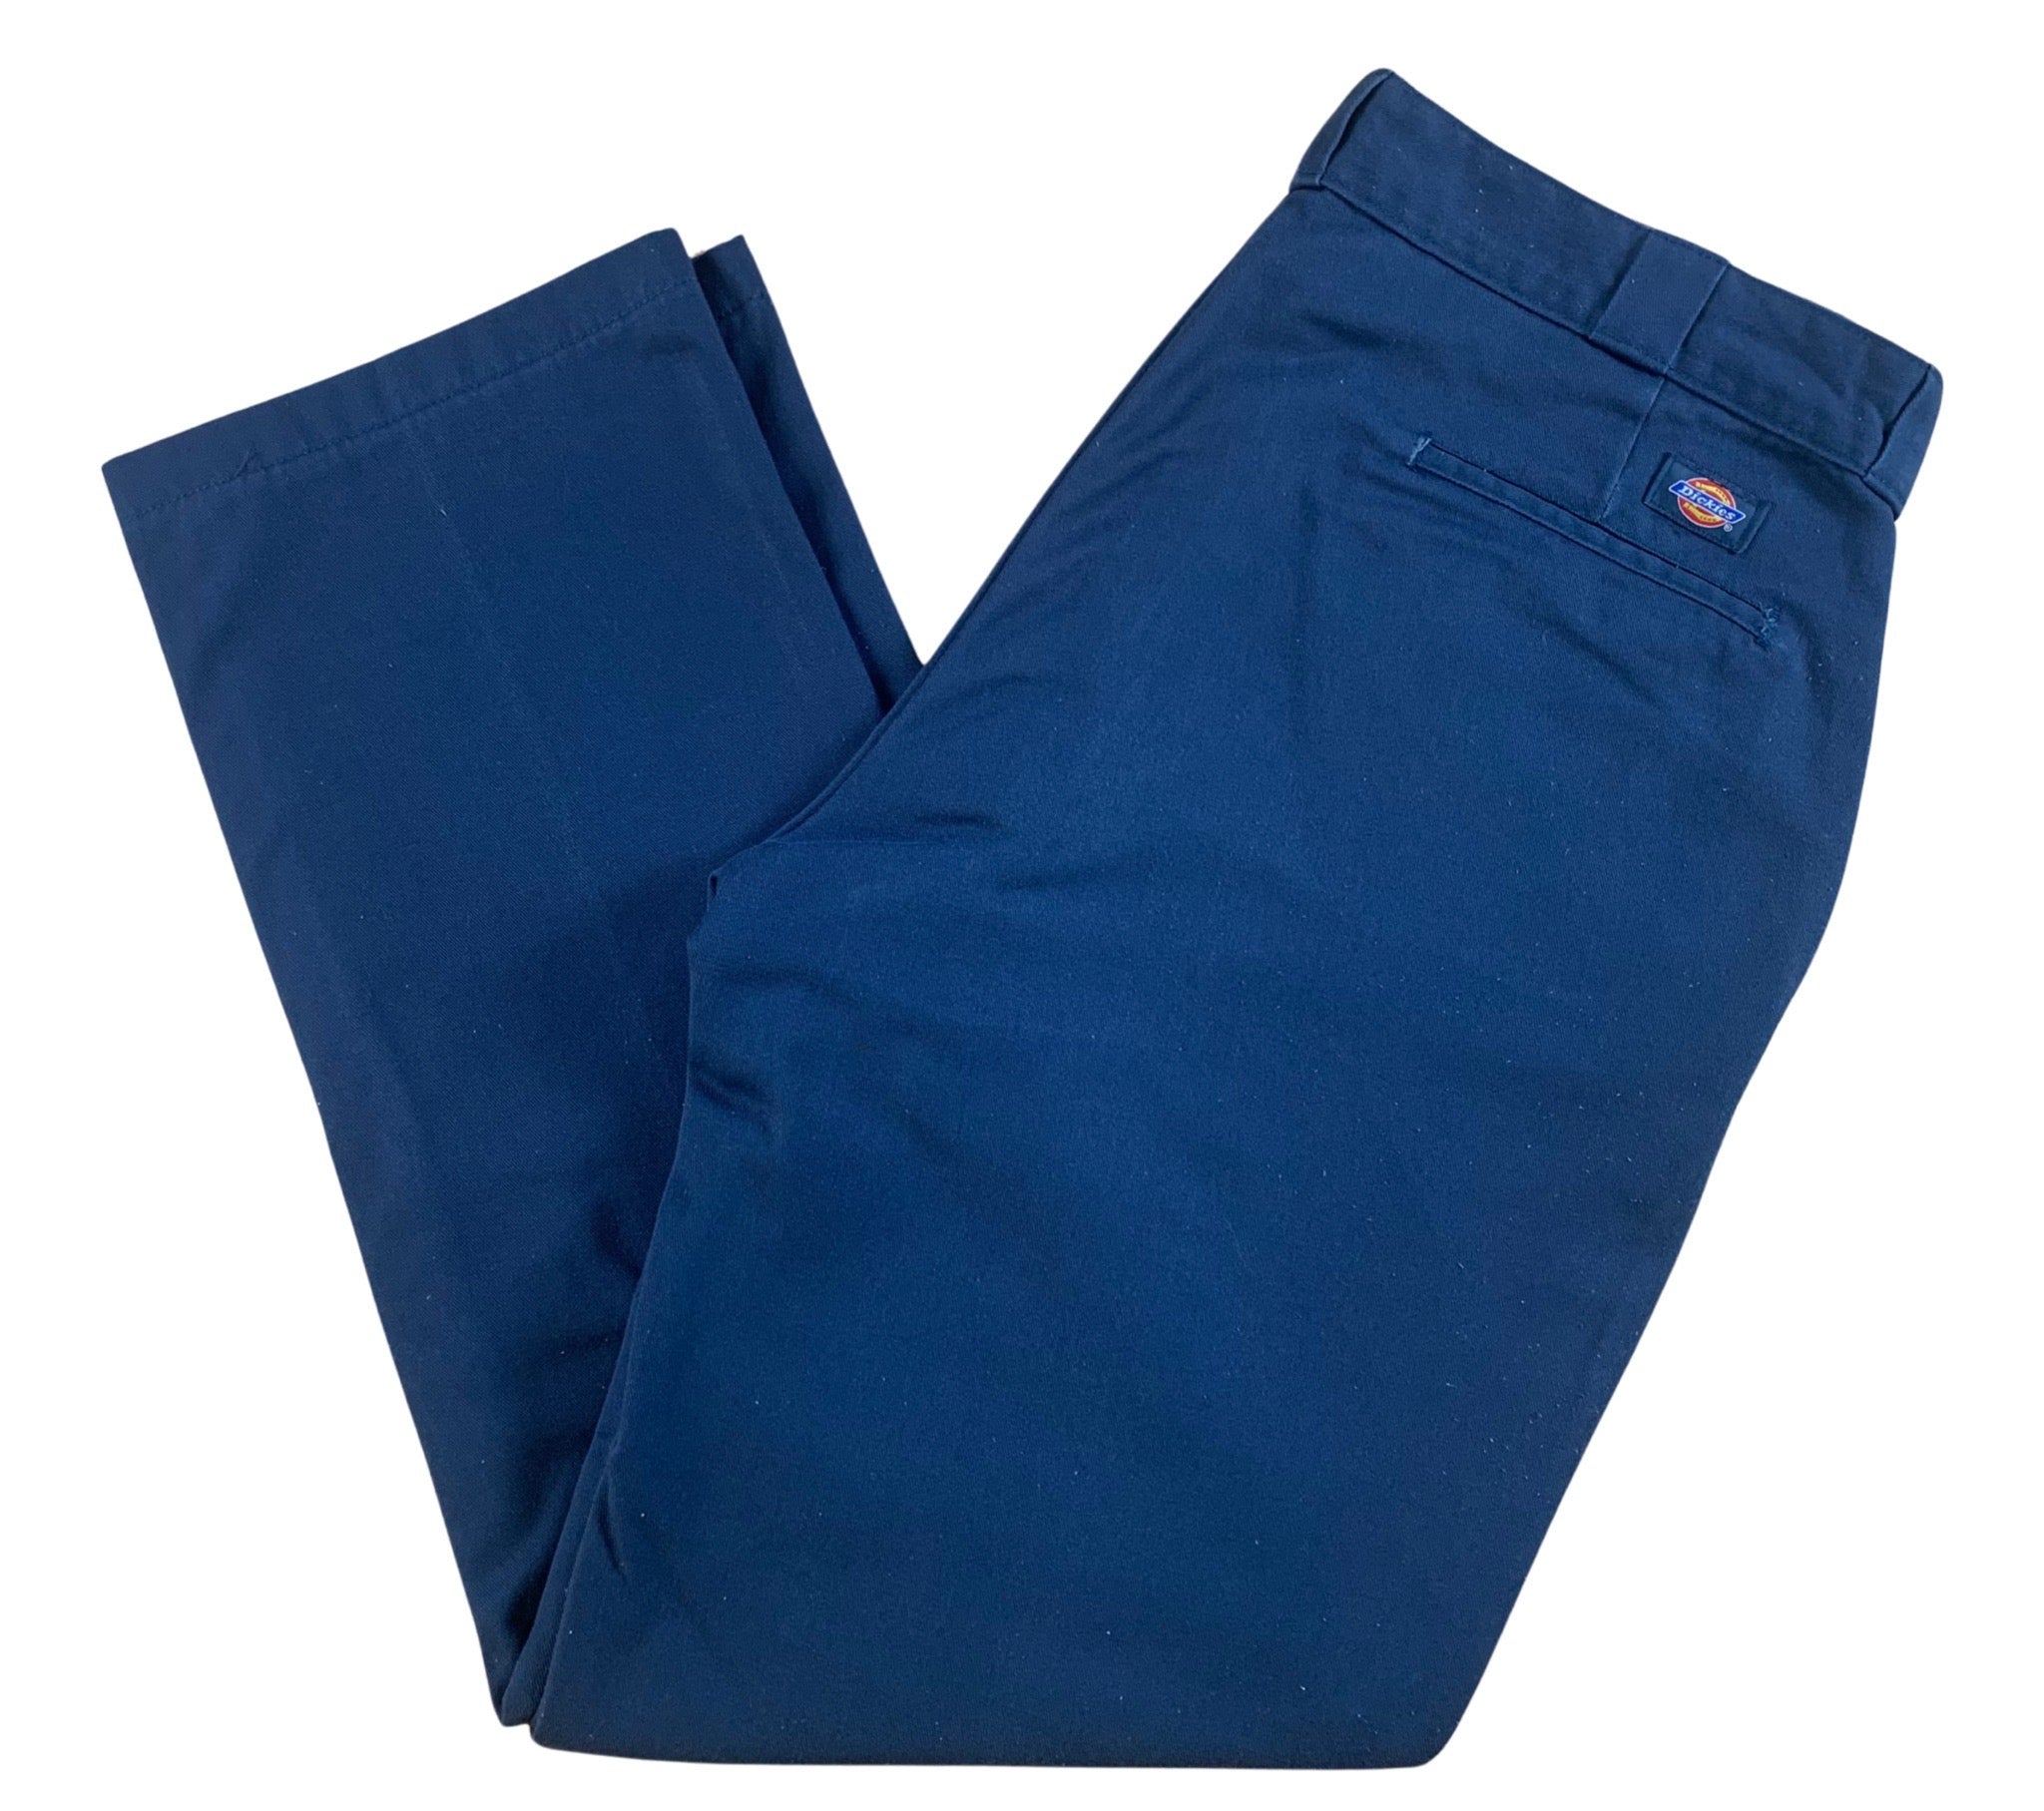 1x Vintage DICKIES Navy Blue Straight Leg Trousers - Waist 44 - Length 32 - Vintage Superstore Online